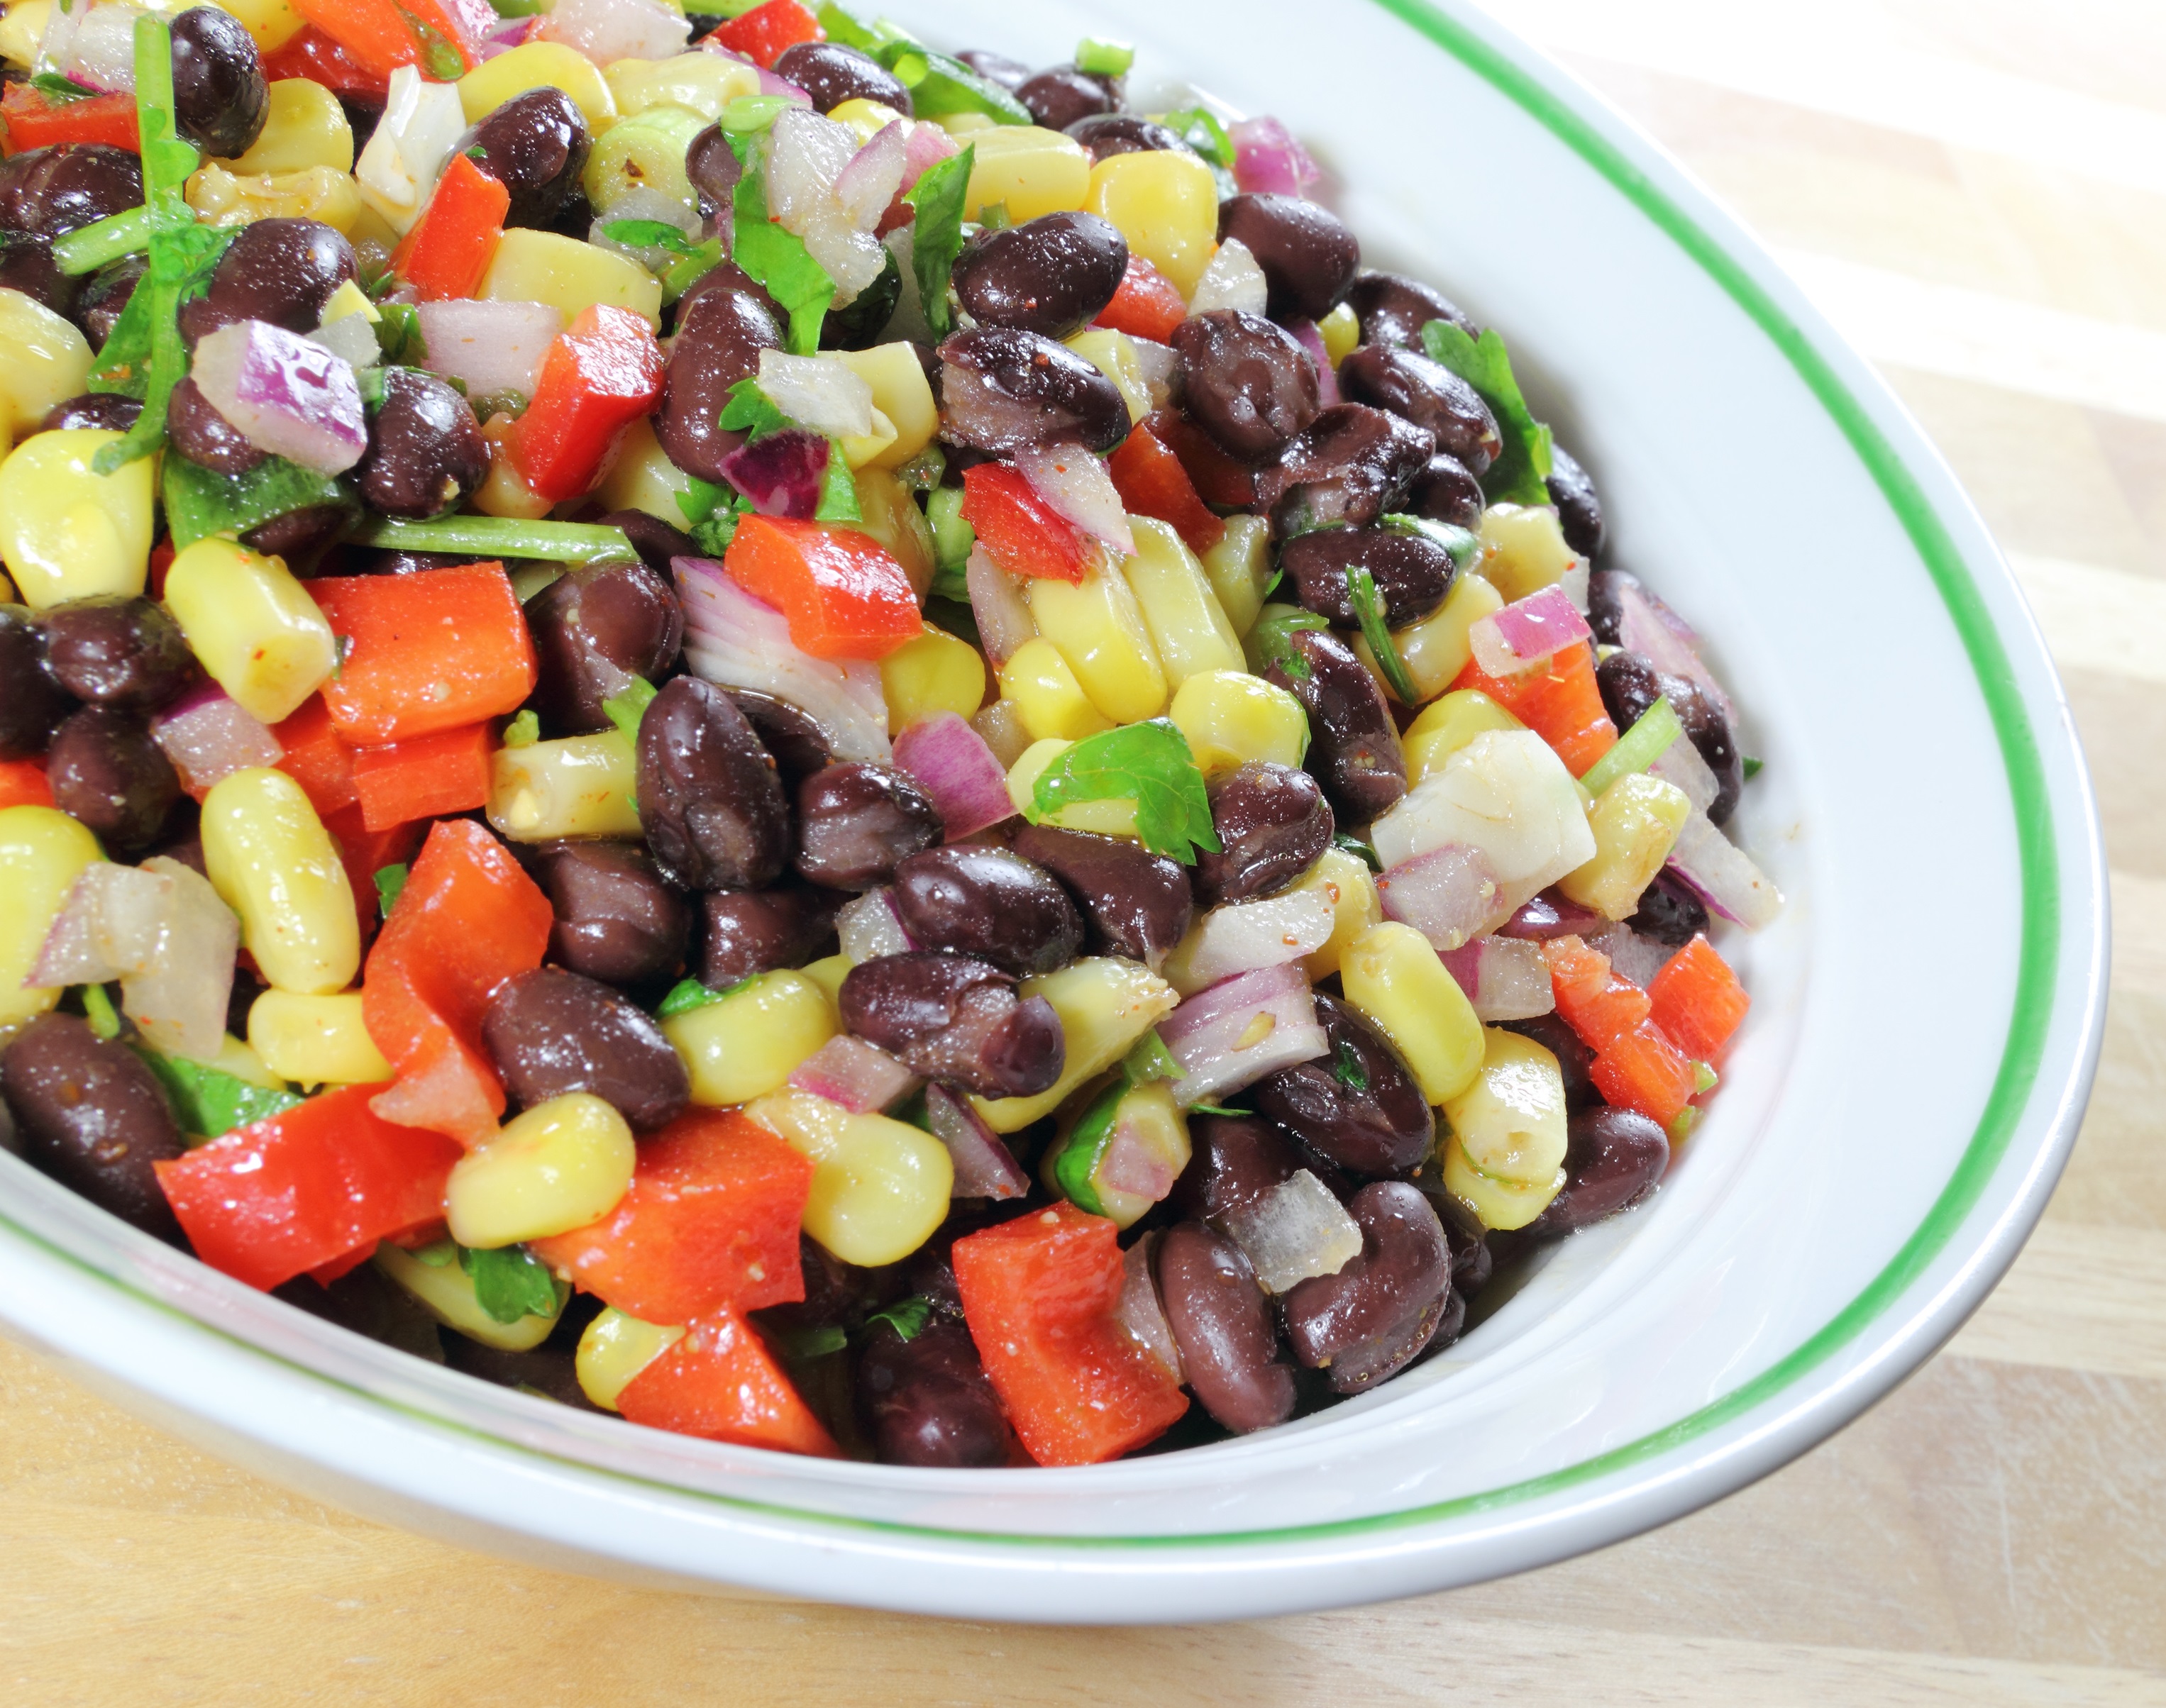 Zesty Black Bean & Corn Salad